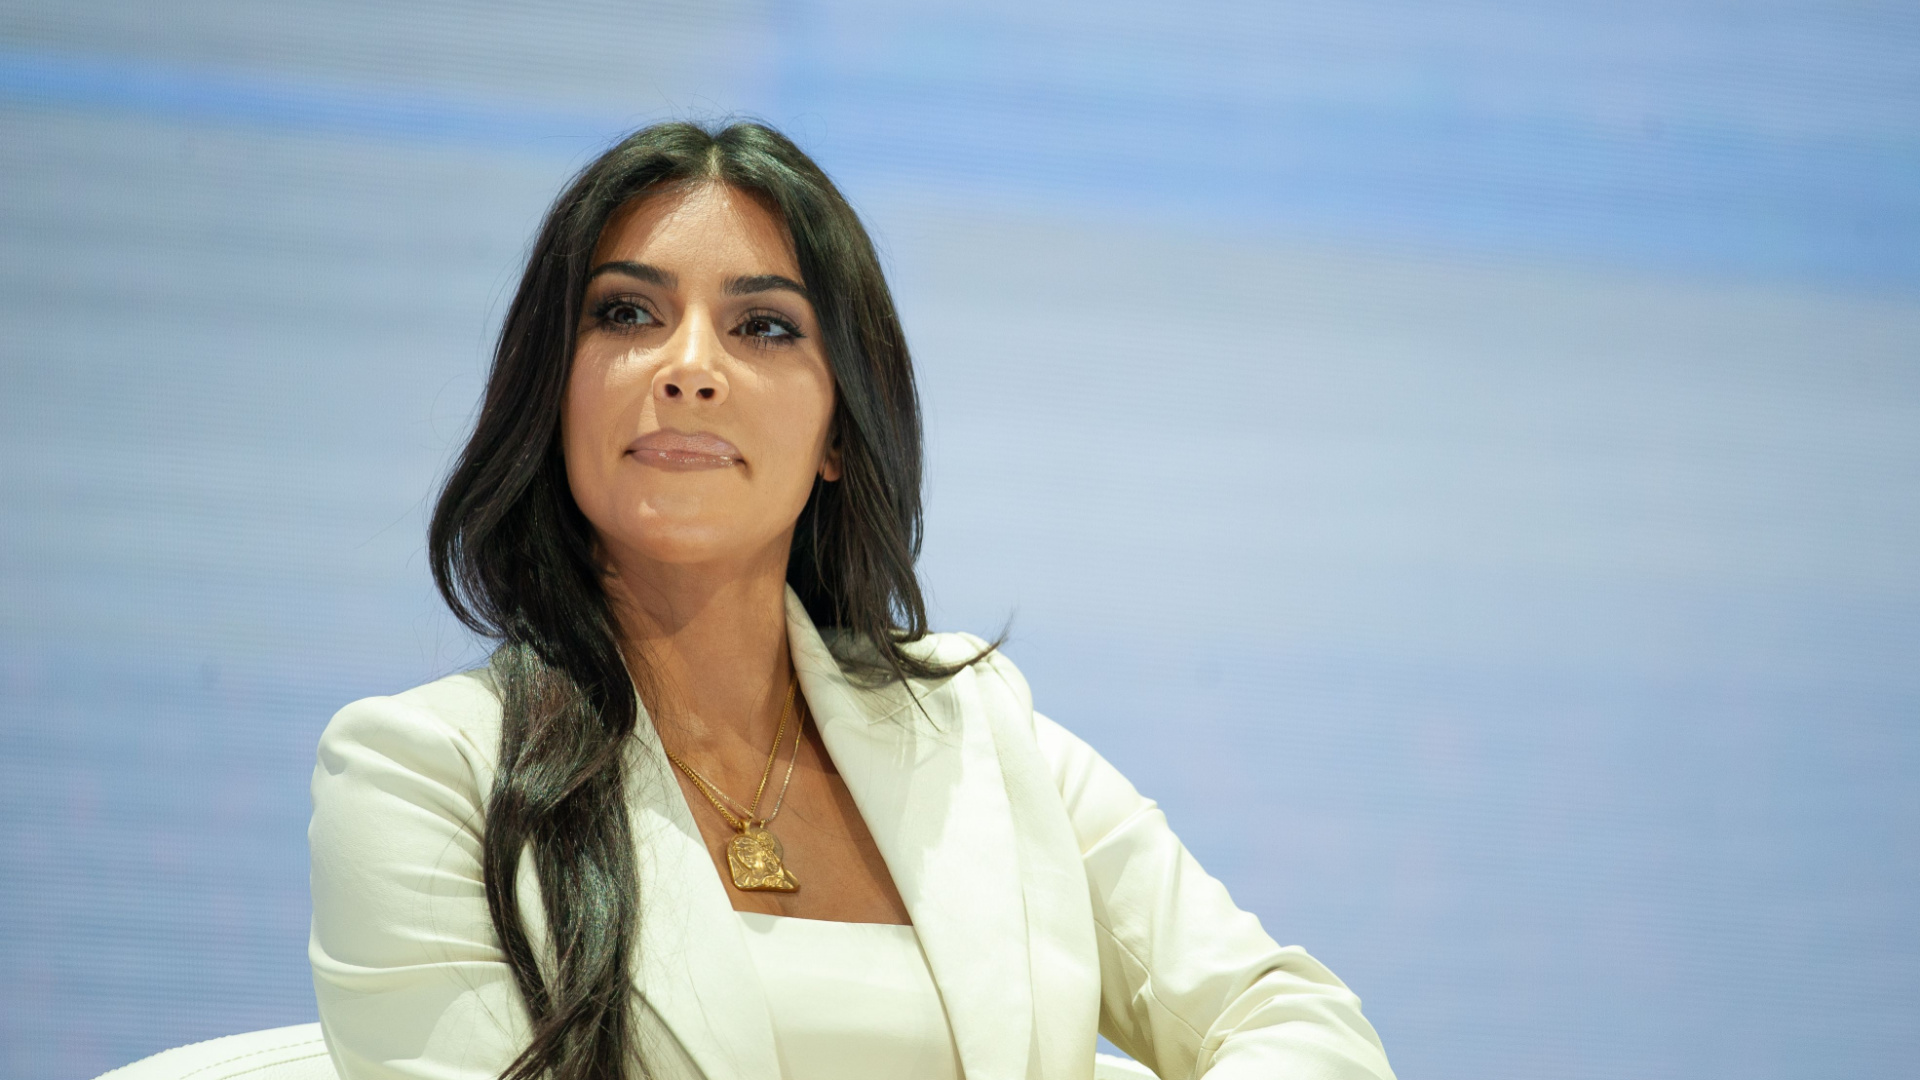 Kim Kardashian – A .26M fine for promoting EthereumMax